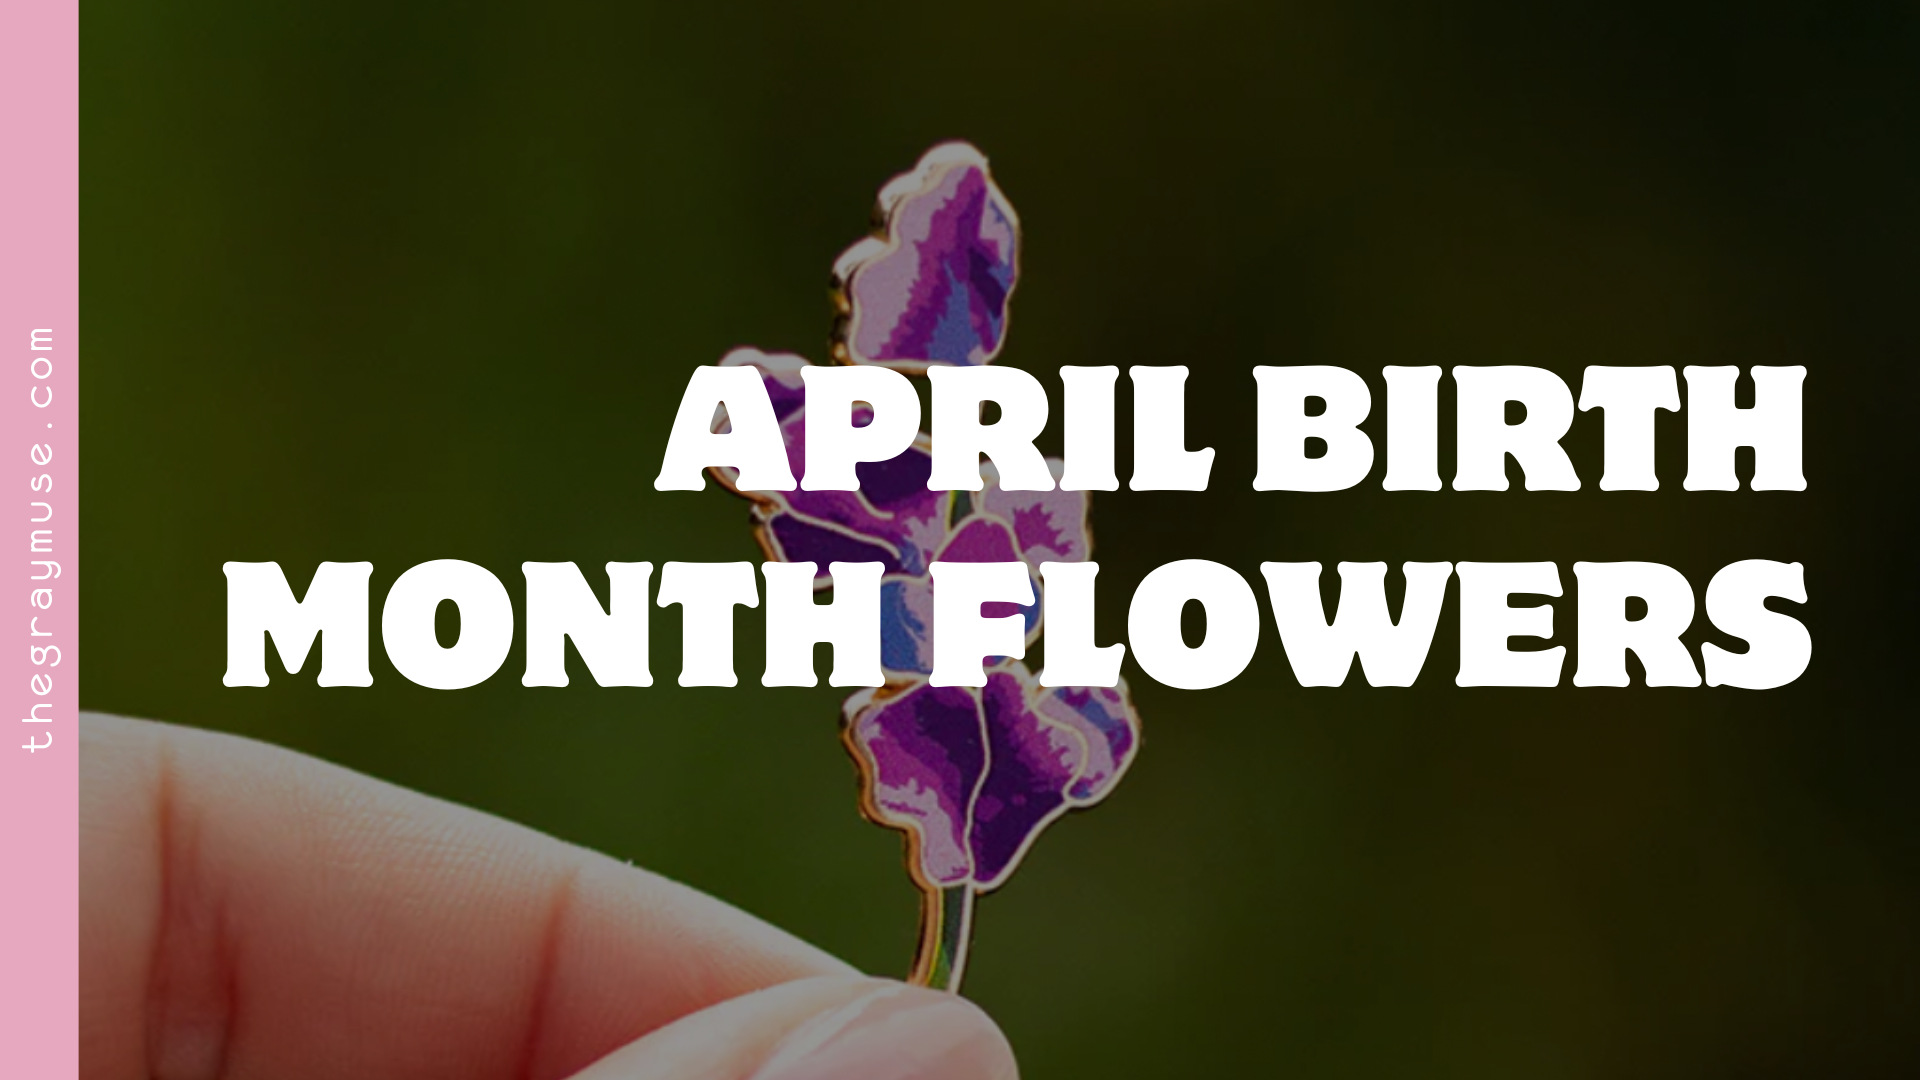 April Birth Month Flowers blog